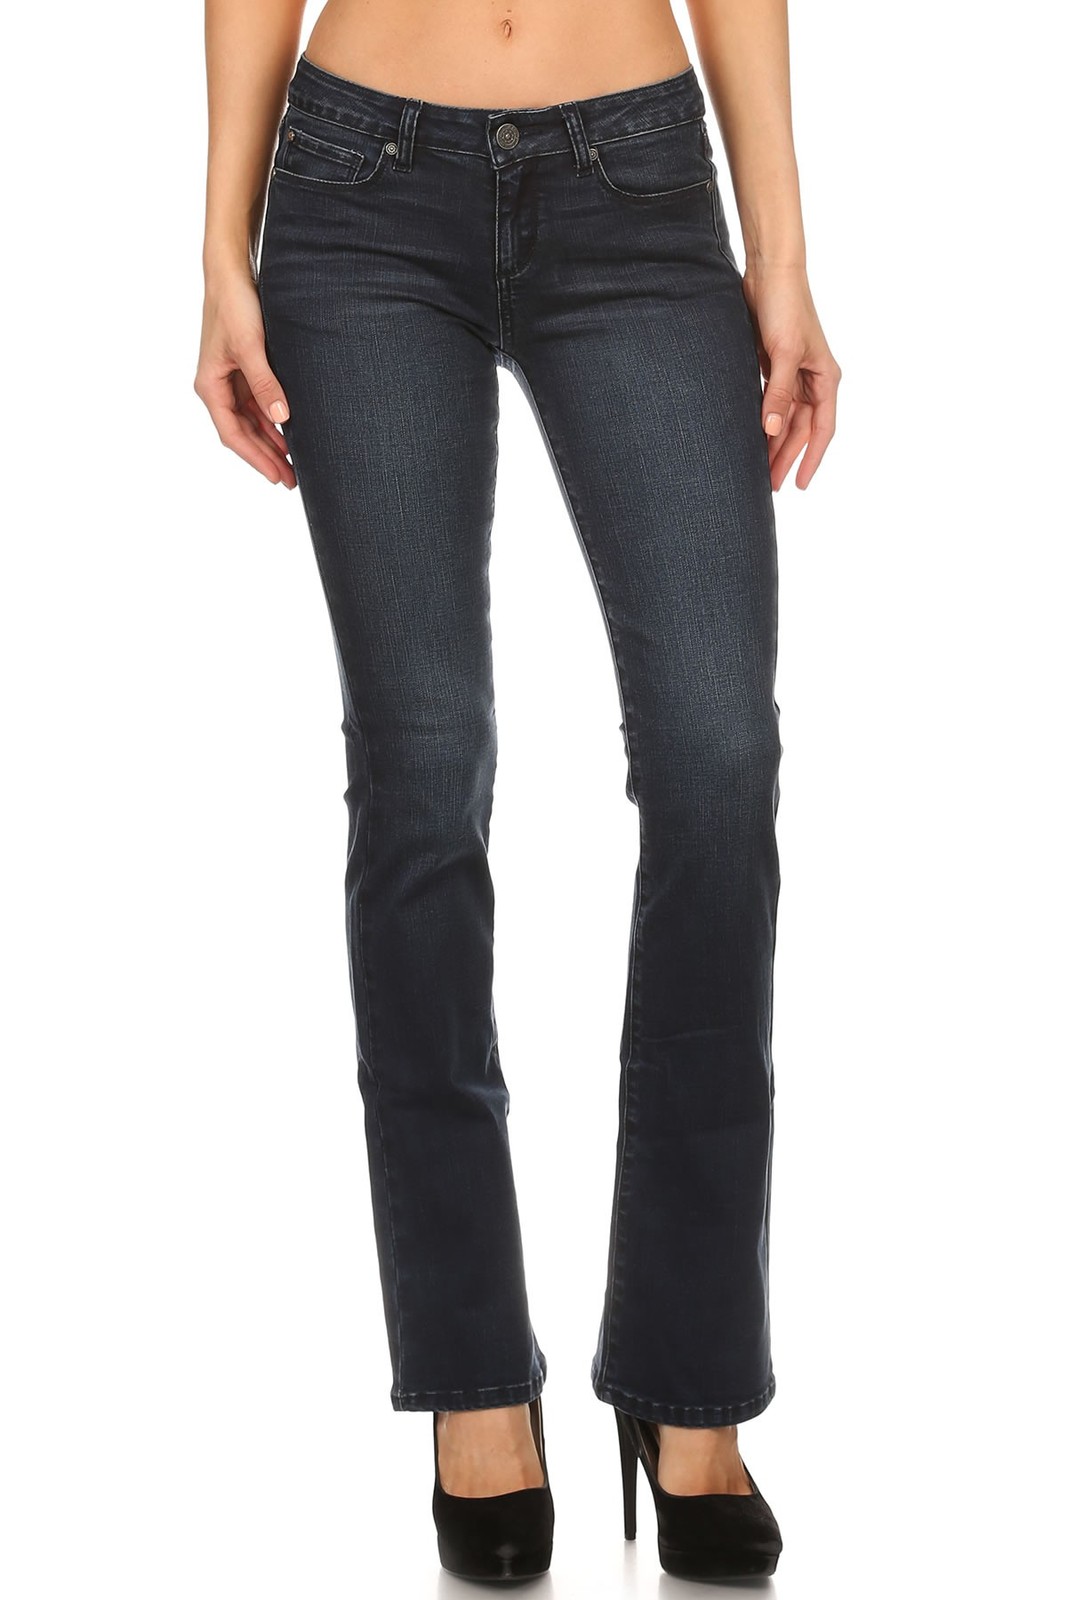 Womens Jeans Stretch Boot Cut Mid Rise Dark Wash Denim Pants EnJean Bootcut- Bottoms